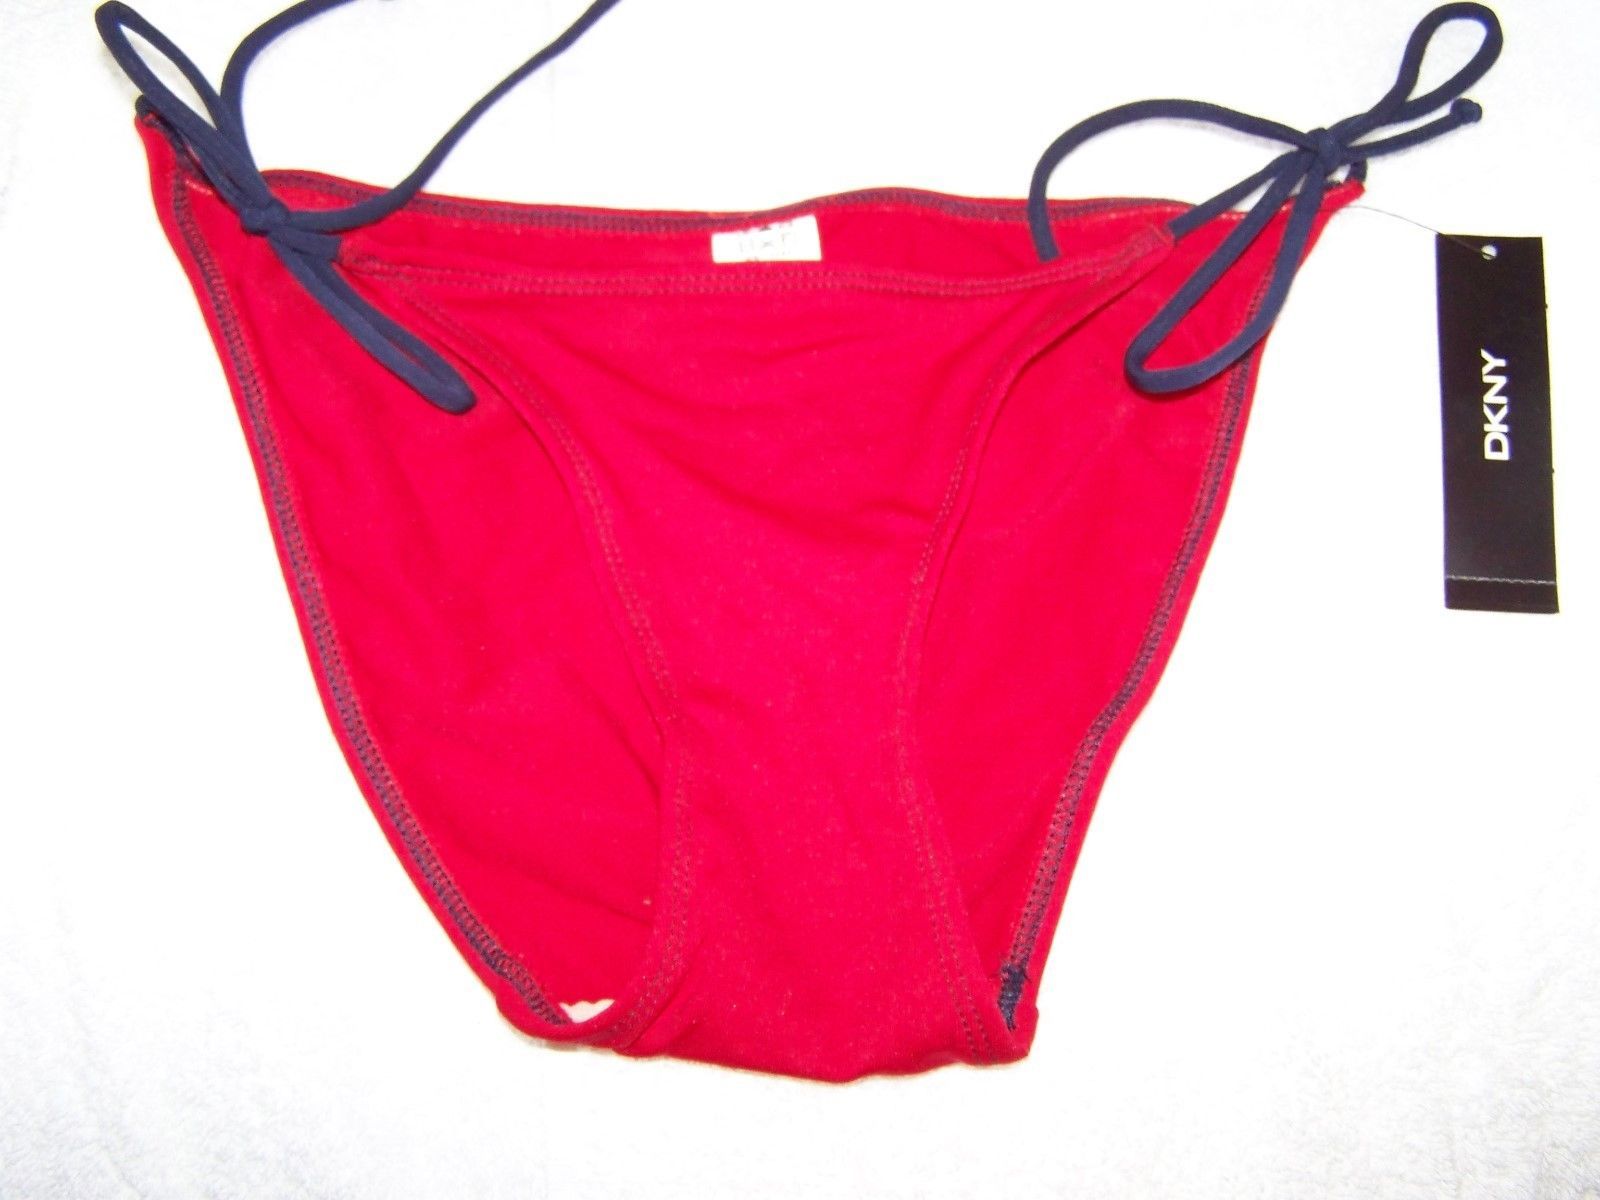 DKNY SWIMSUIT SWIMWEAR STRING BIKINI BOTTOM SIZE 4 NEW - Swimwear